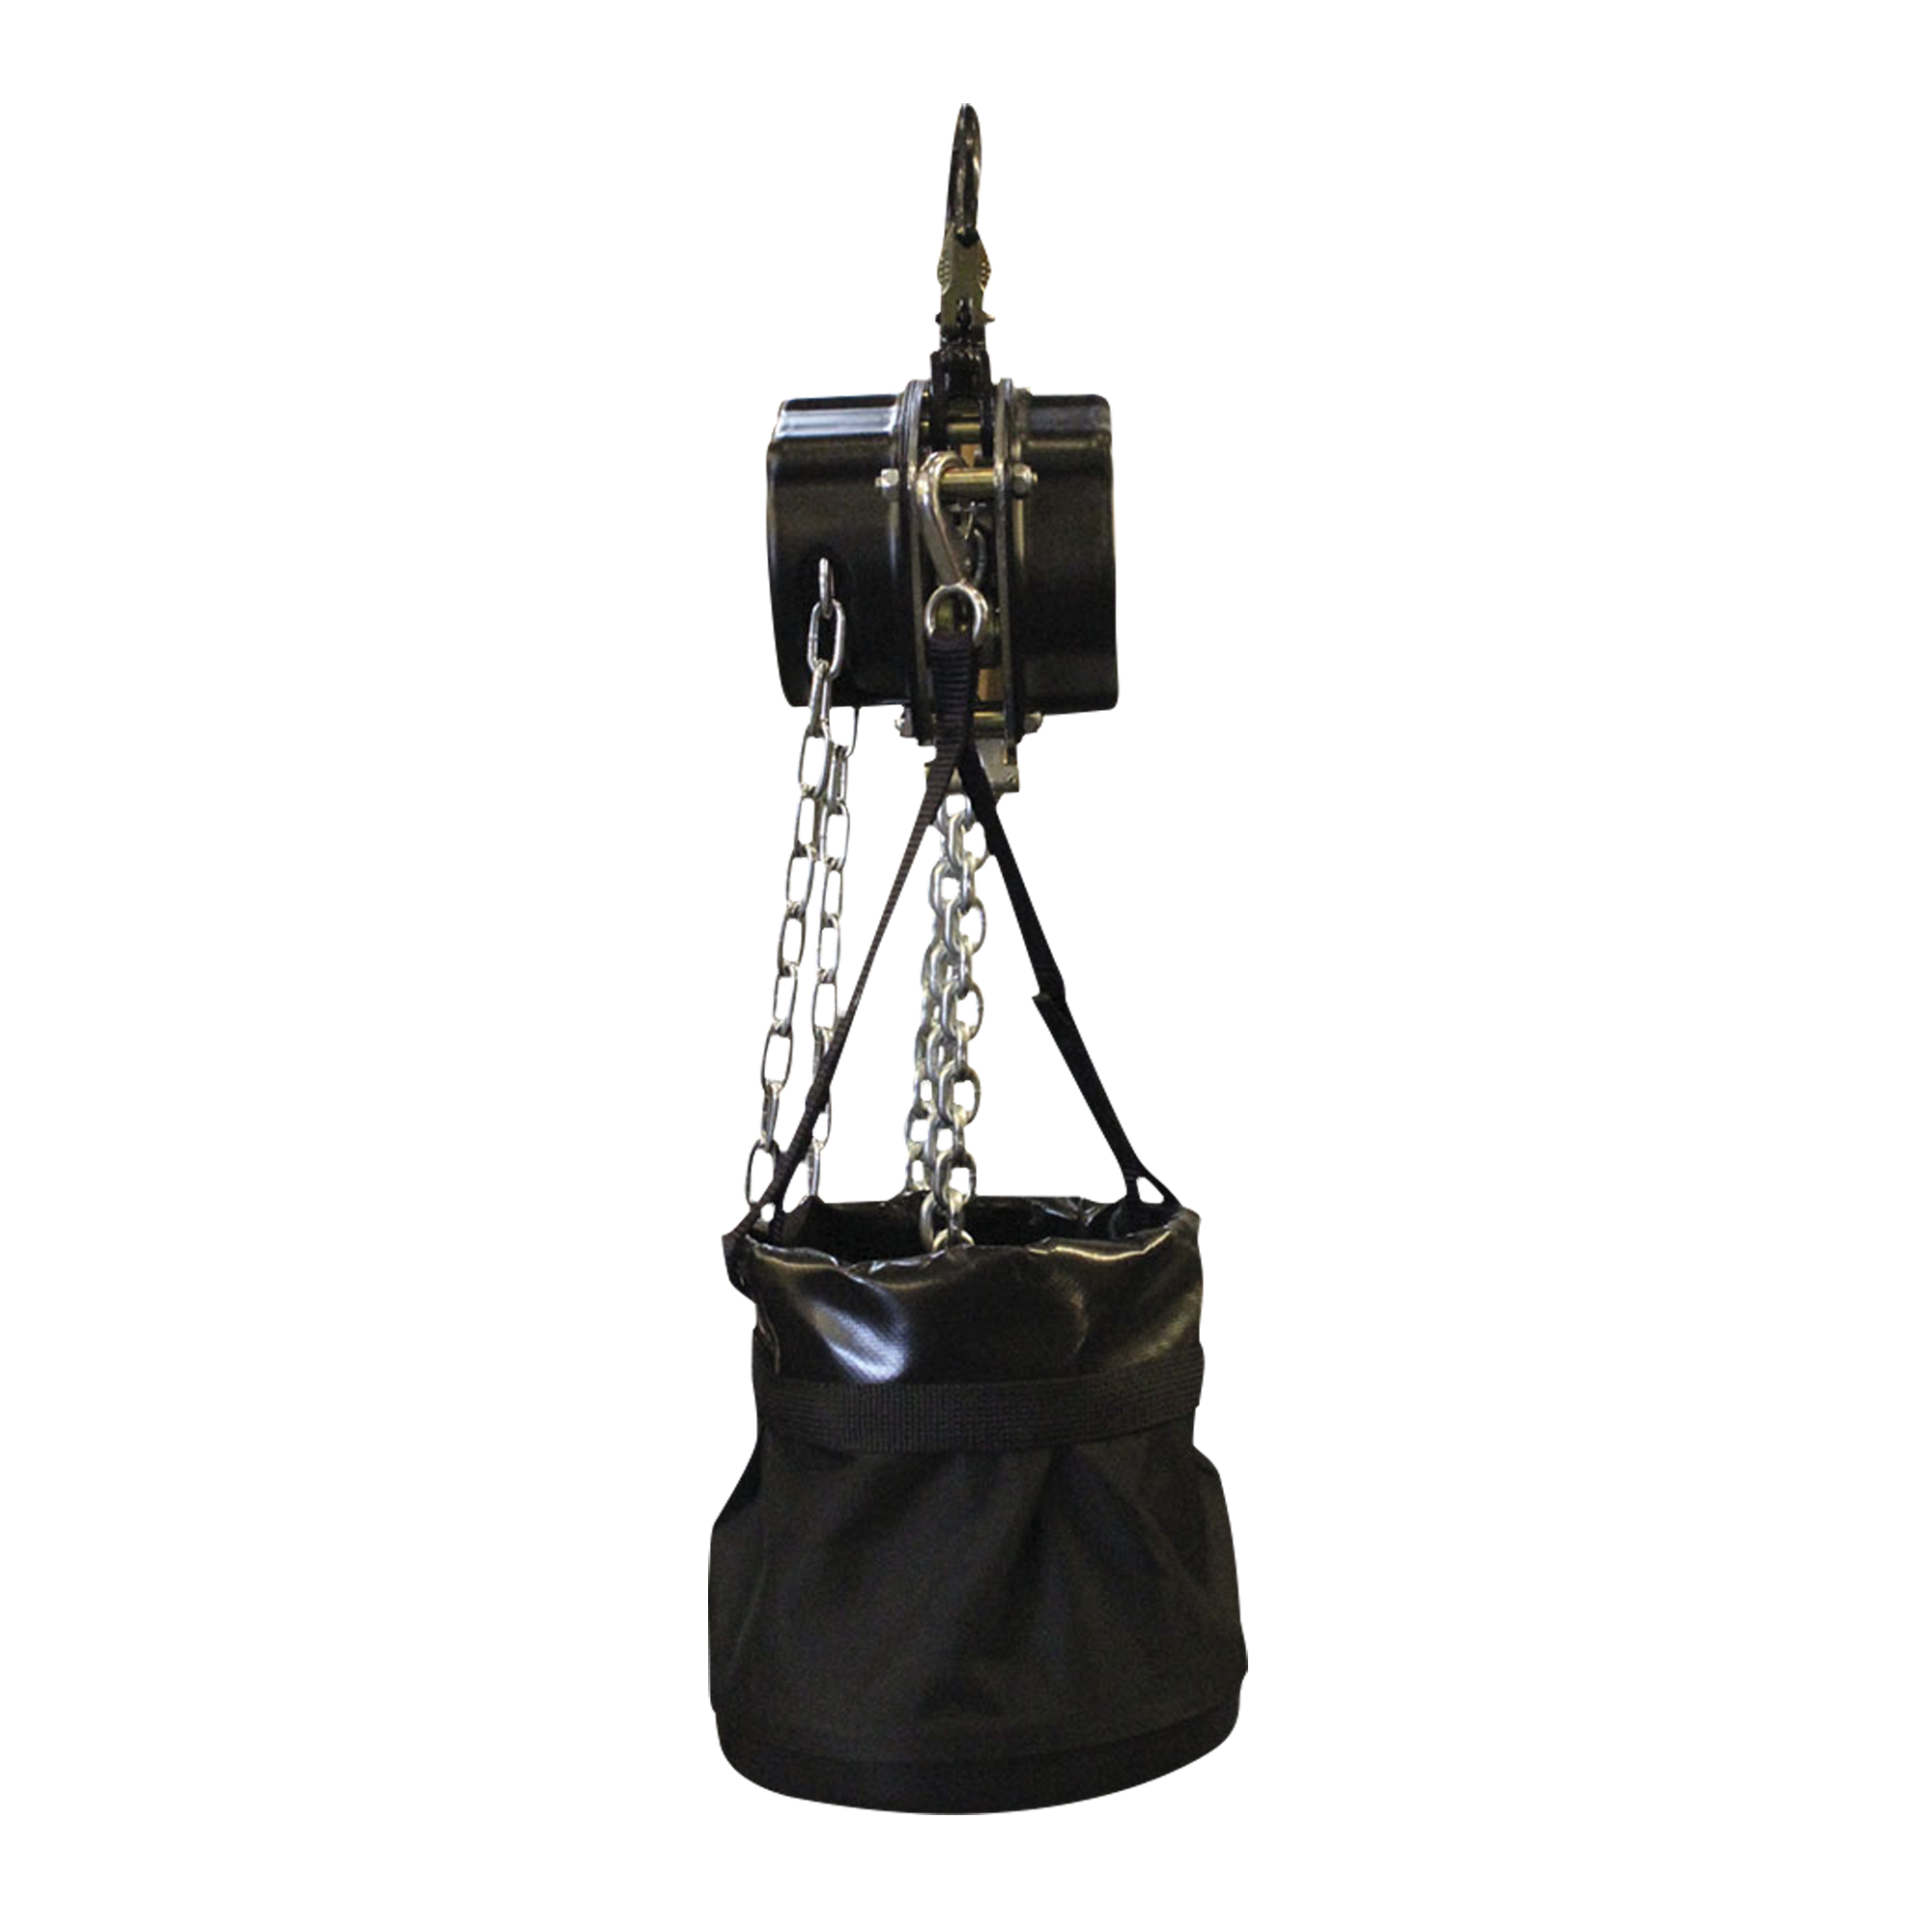 Eller Chain Bag for Chain Hoist für 0,5 t 175 mm x 22,5 cm